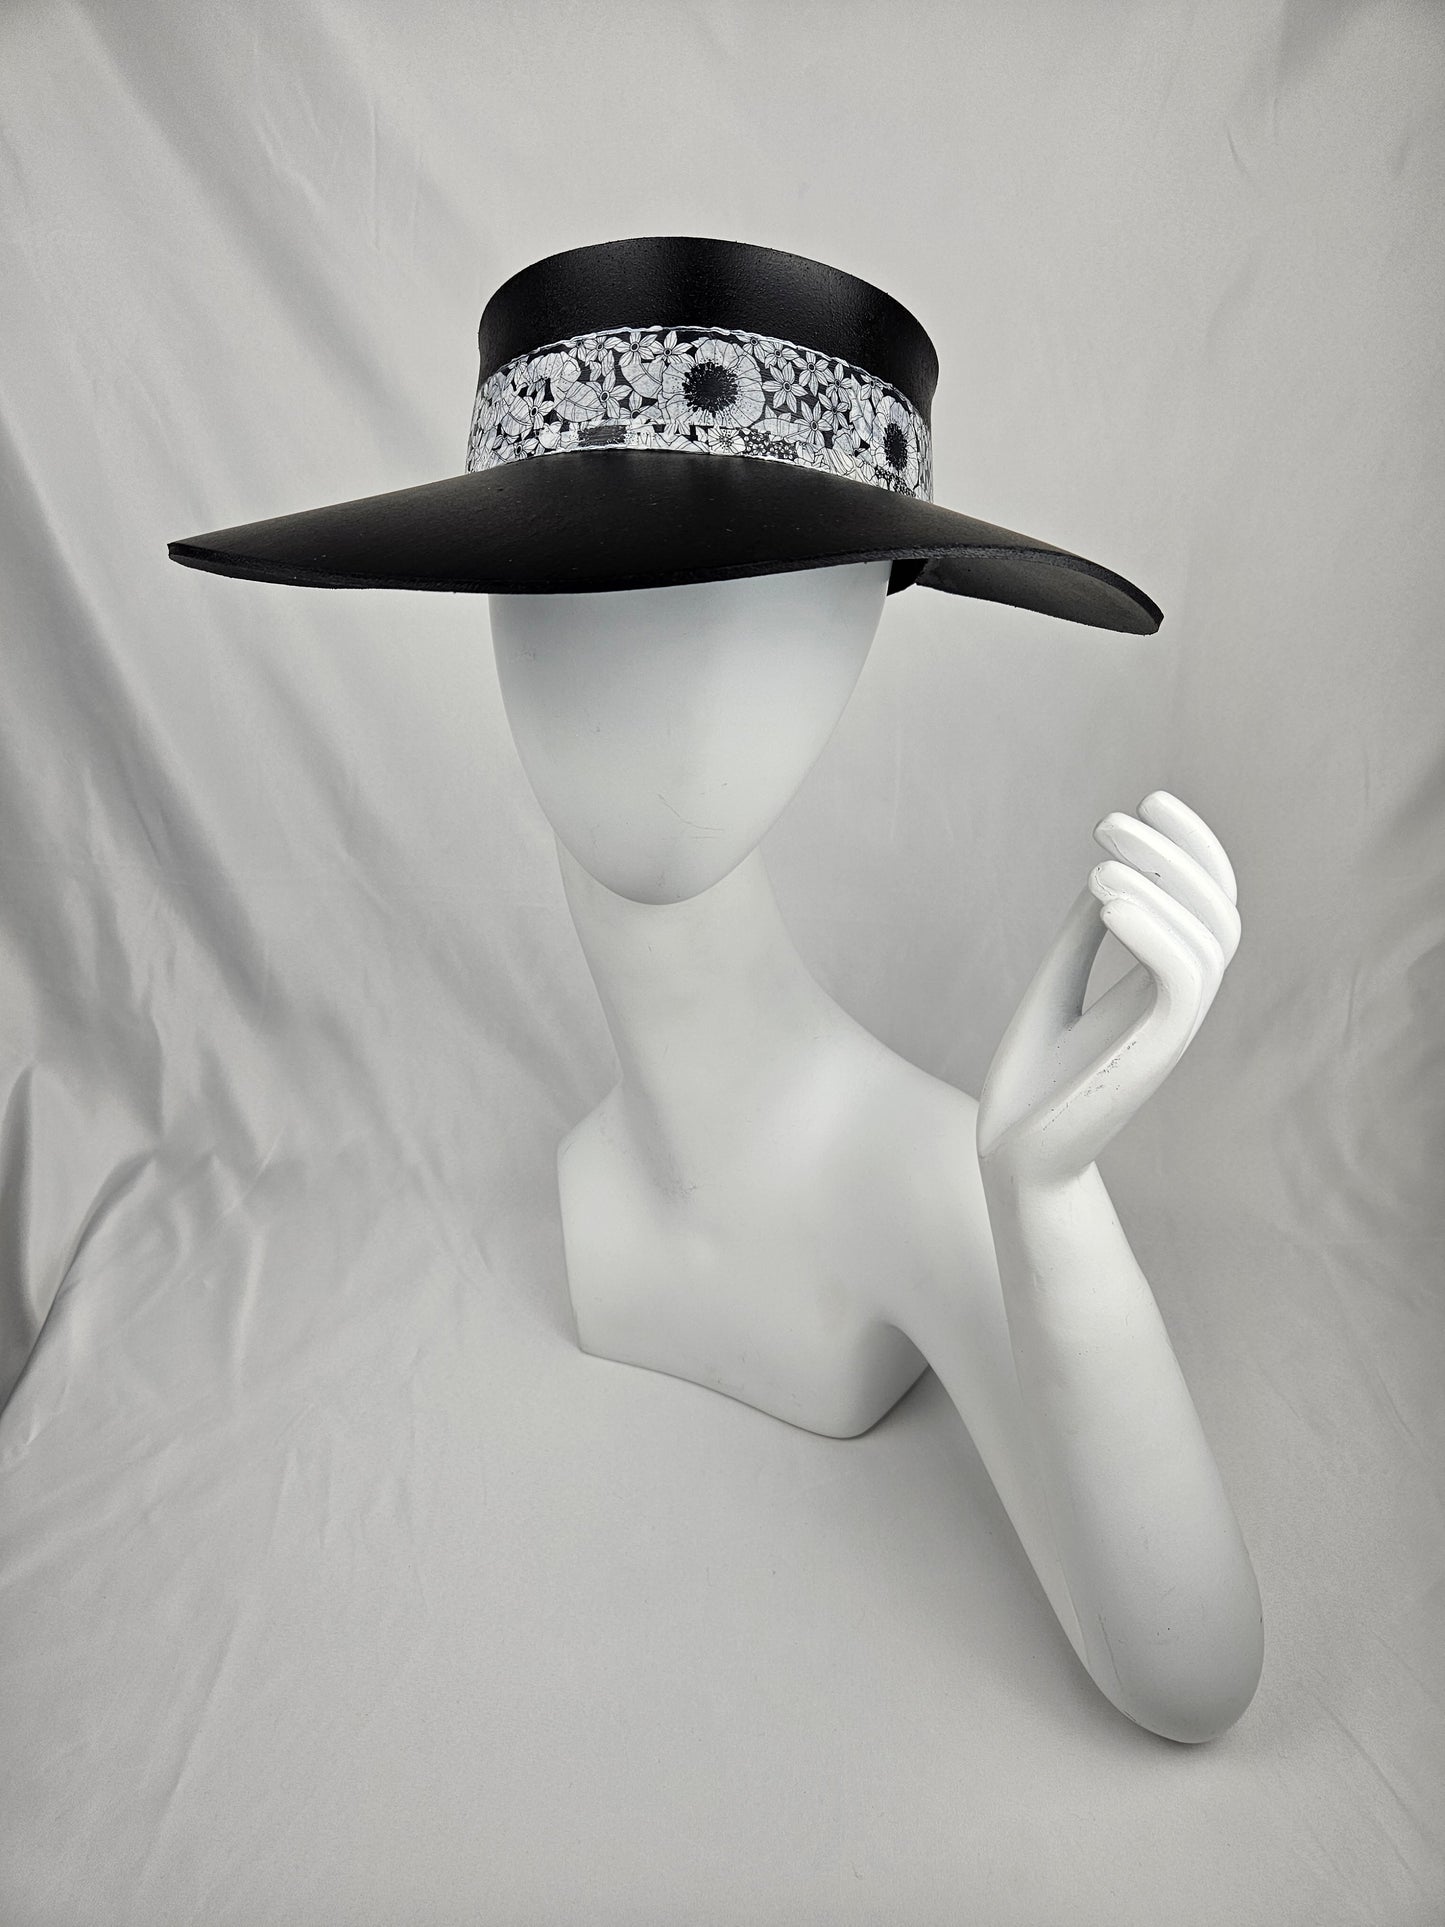 Timeless Black Audrey Foam Sun Visor Hat with Floral Band and Handpainted Motif: 1920s, Swim, Pool, Beach, No Headache